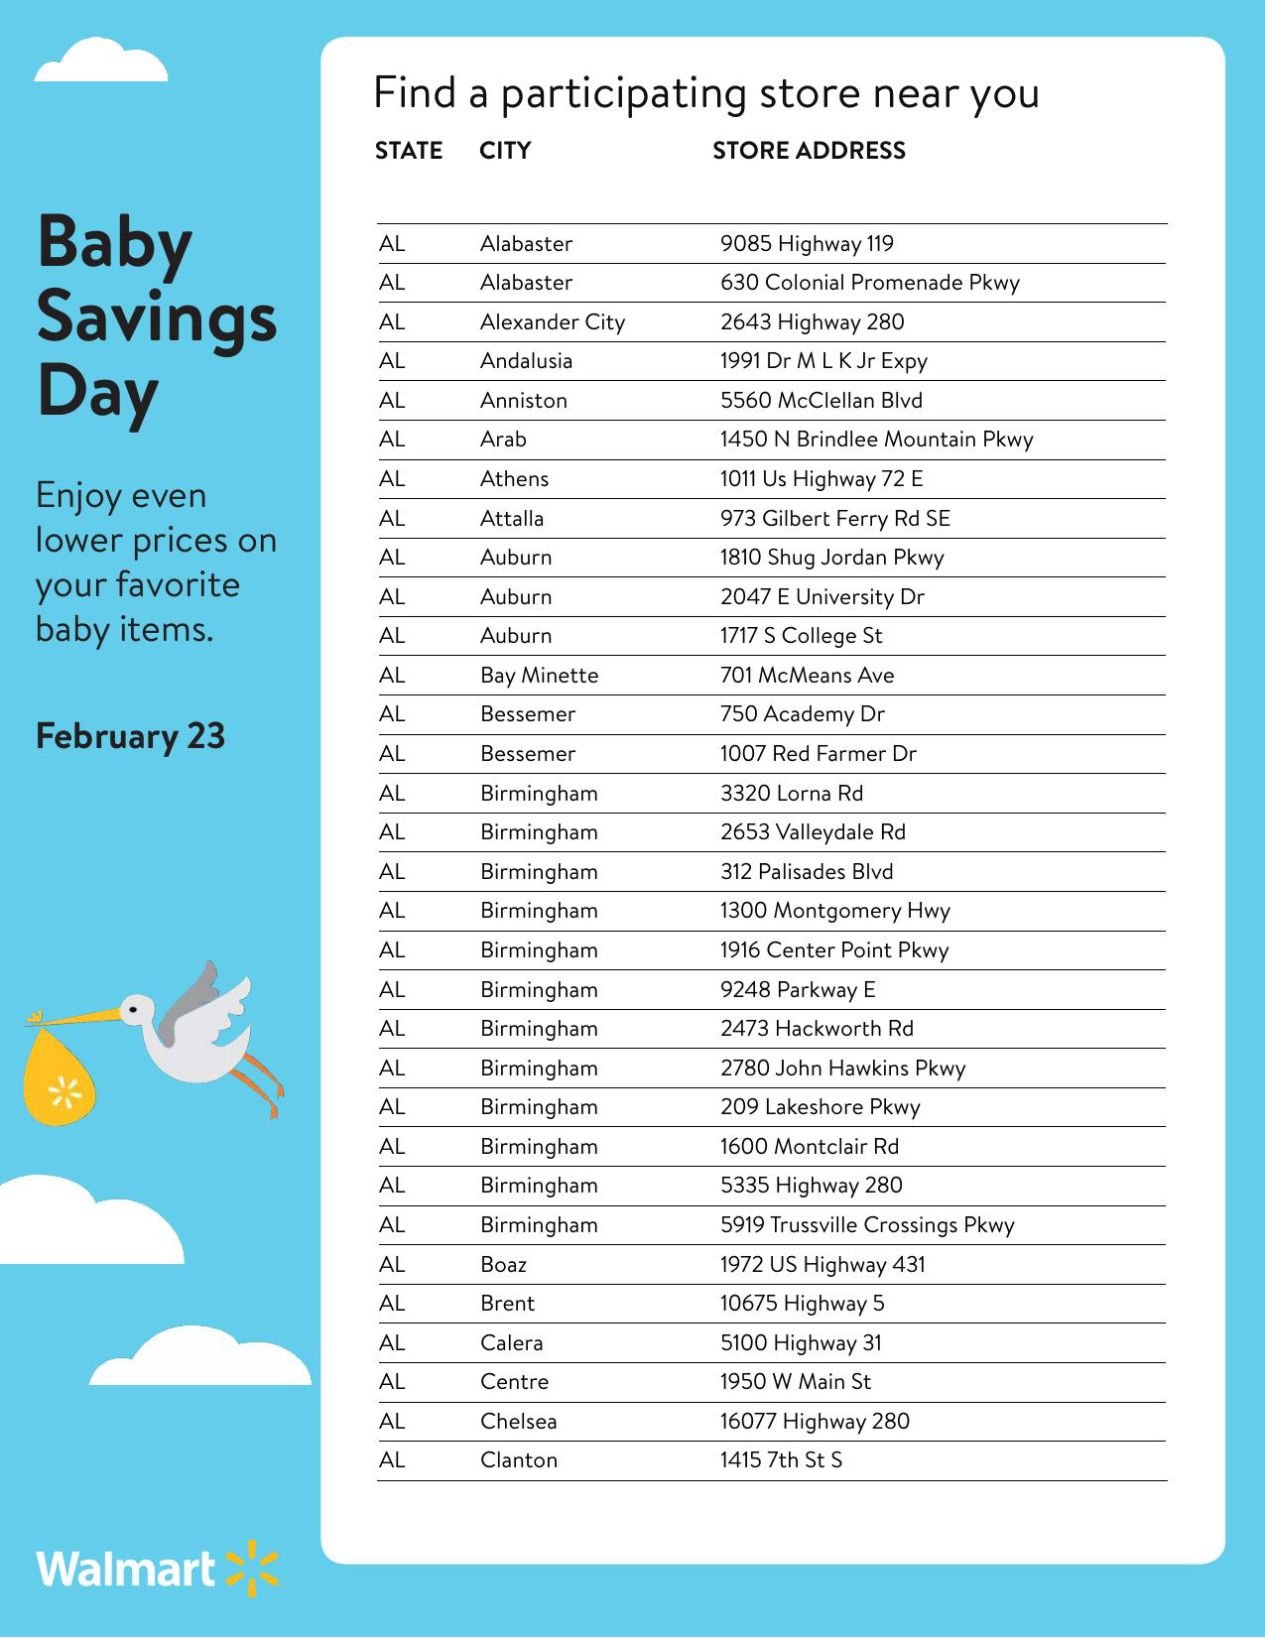 walmart hosting baby savings day